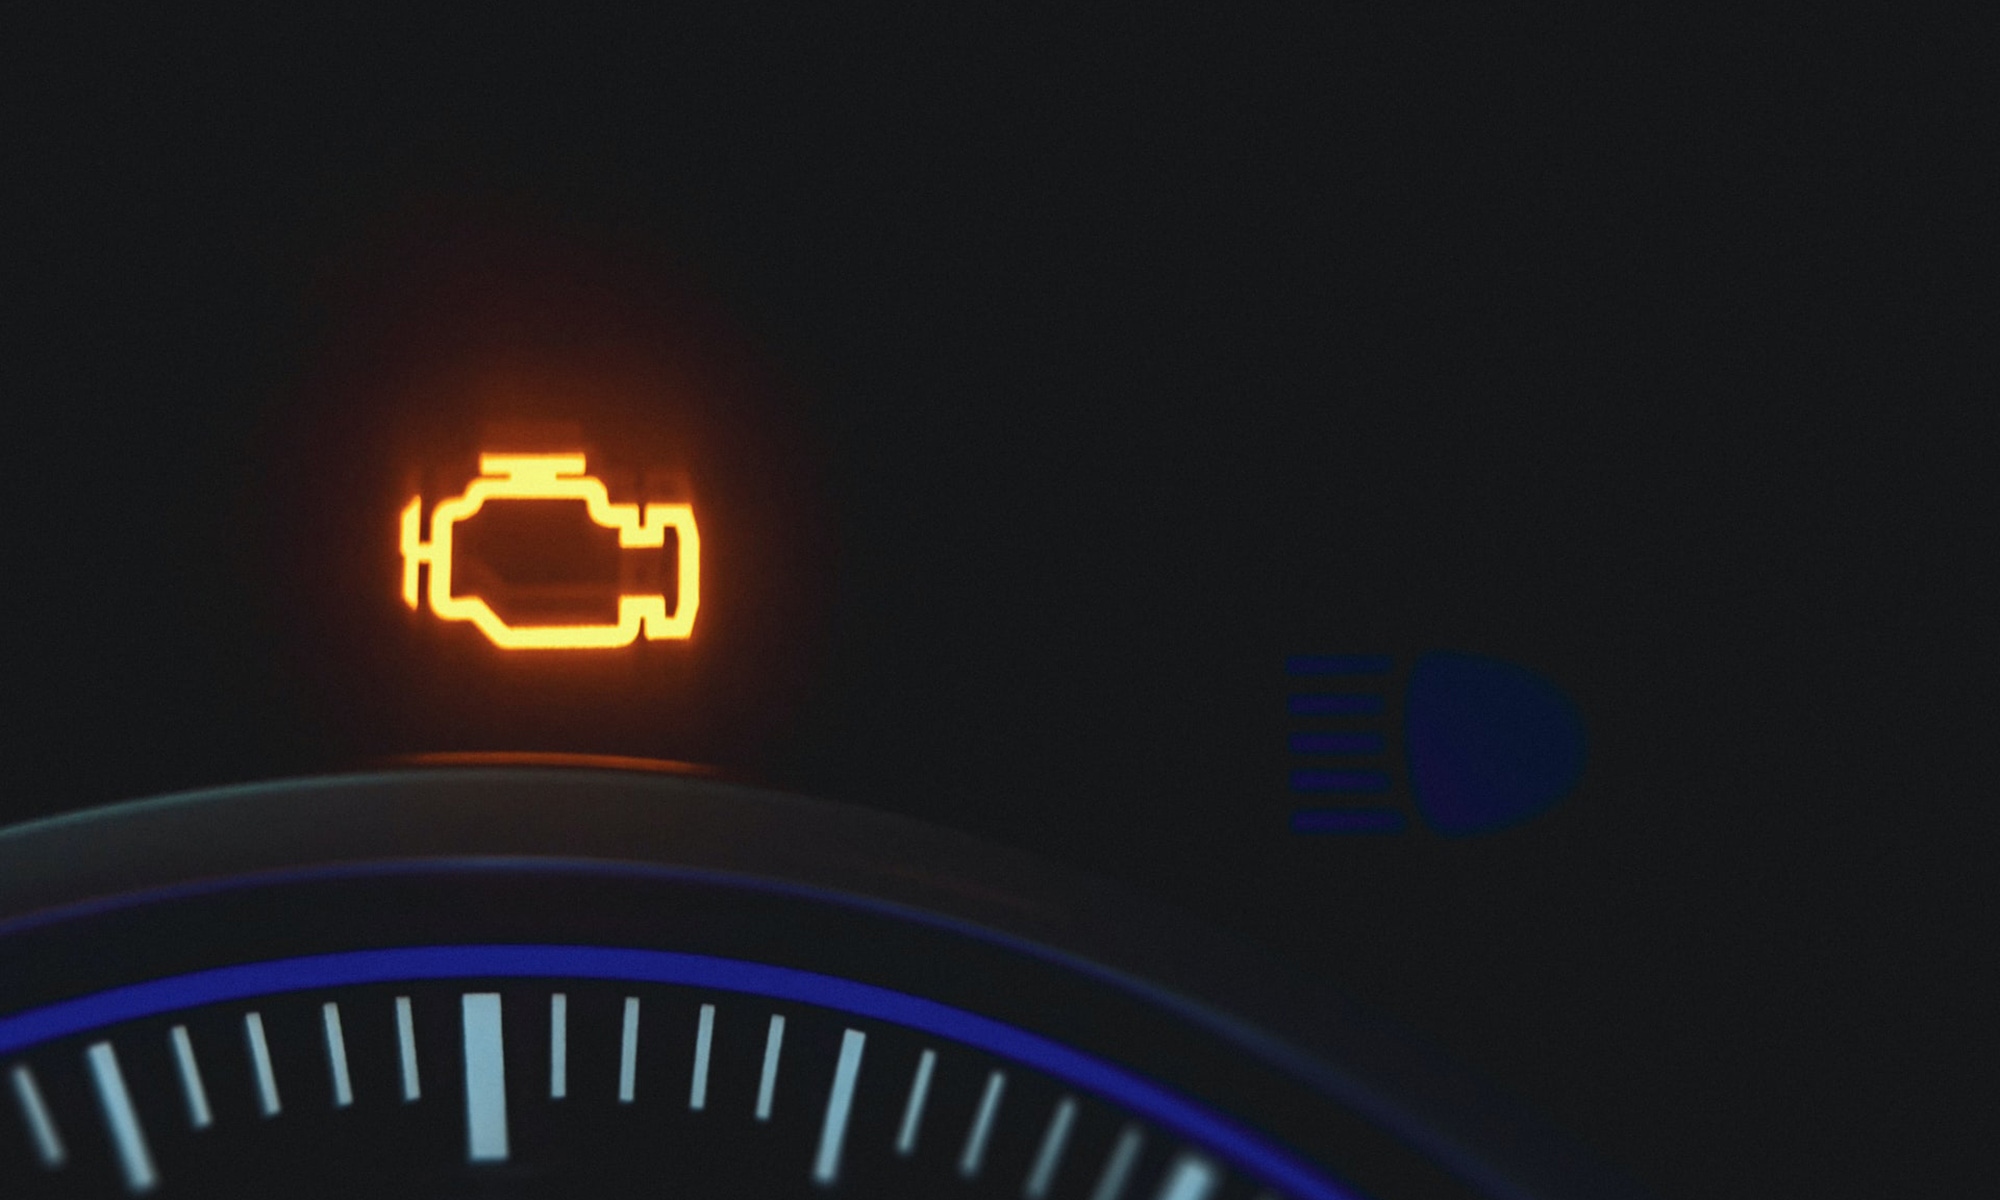 Check engine light illuminated on a car's dashboard